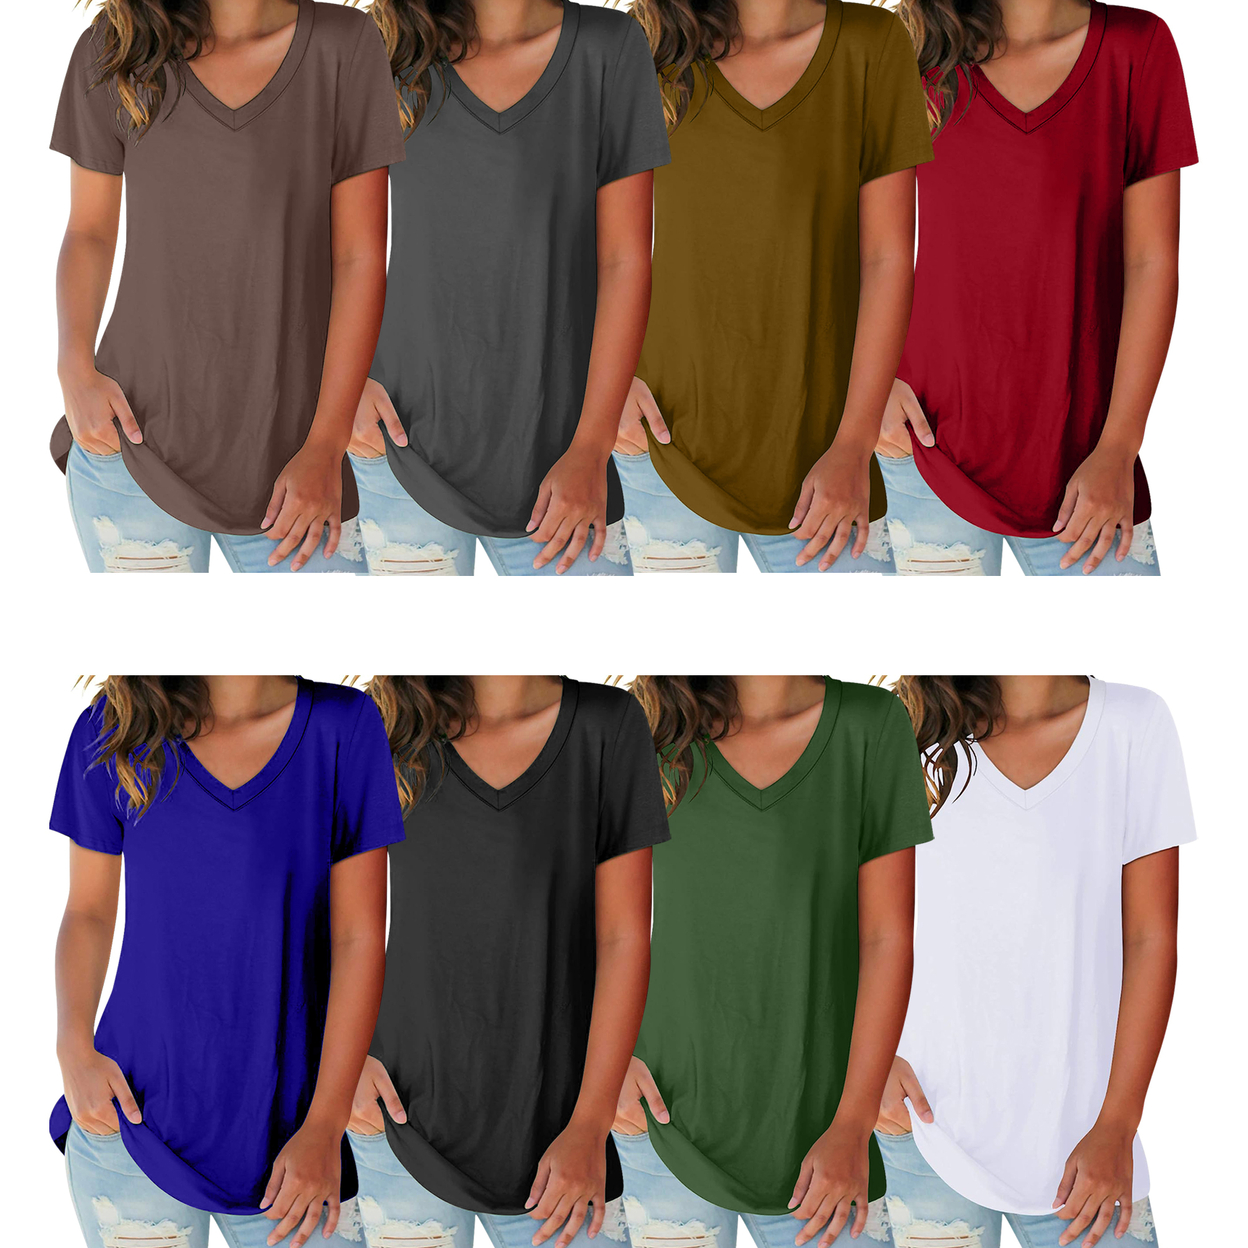 2-Pack: Women's Ultra Soft Smooth Cotton Blend Basic V-Neck Short Sleeve Shirts - Black & Grey, Xx-large